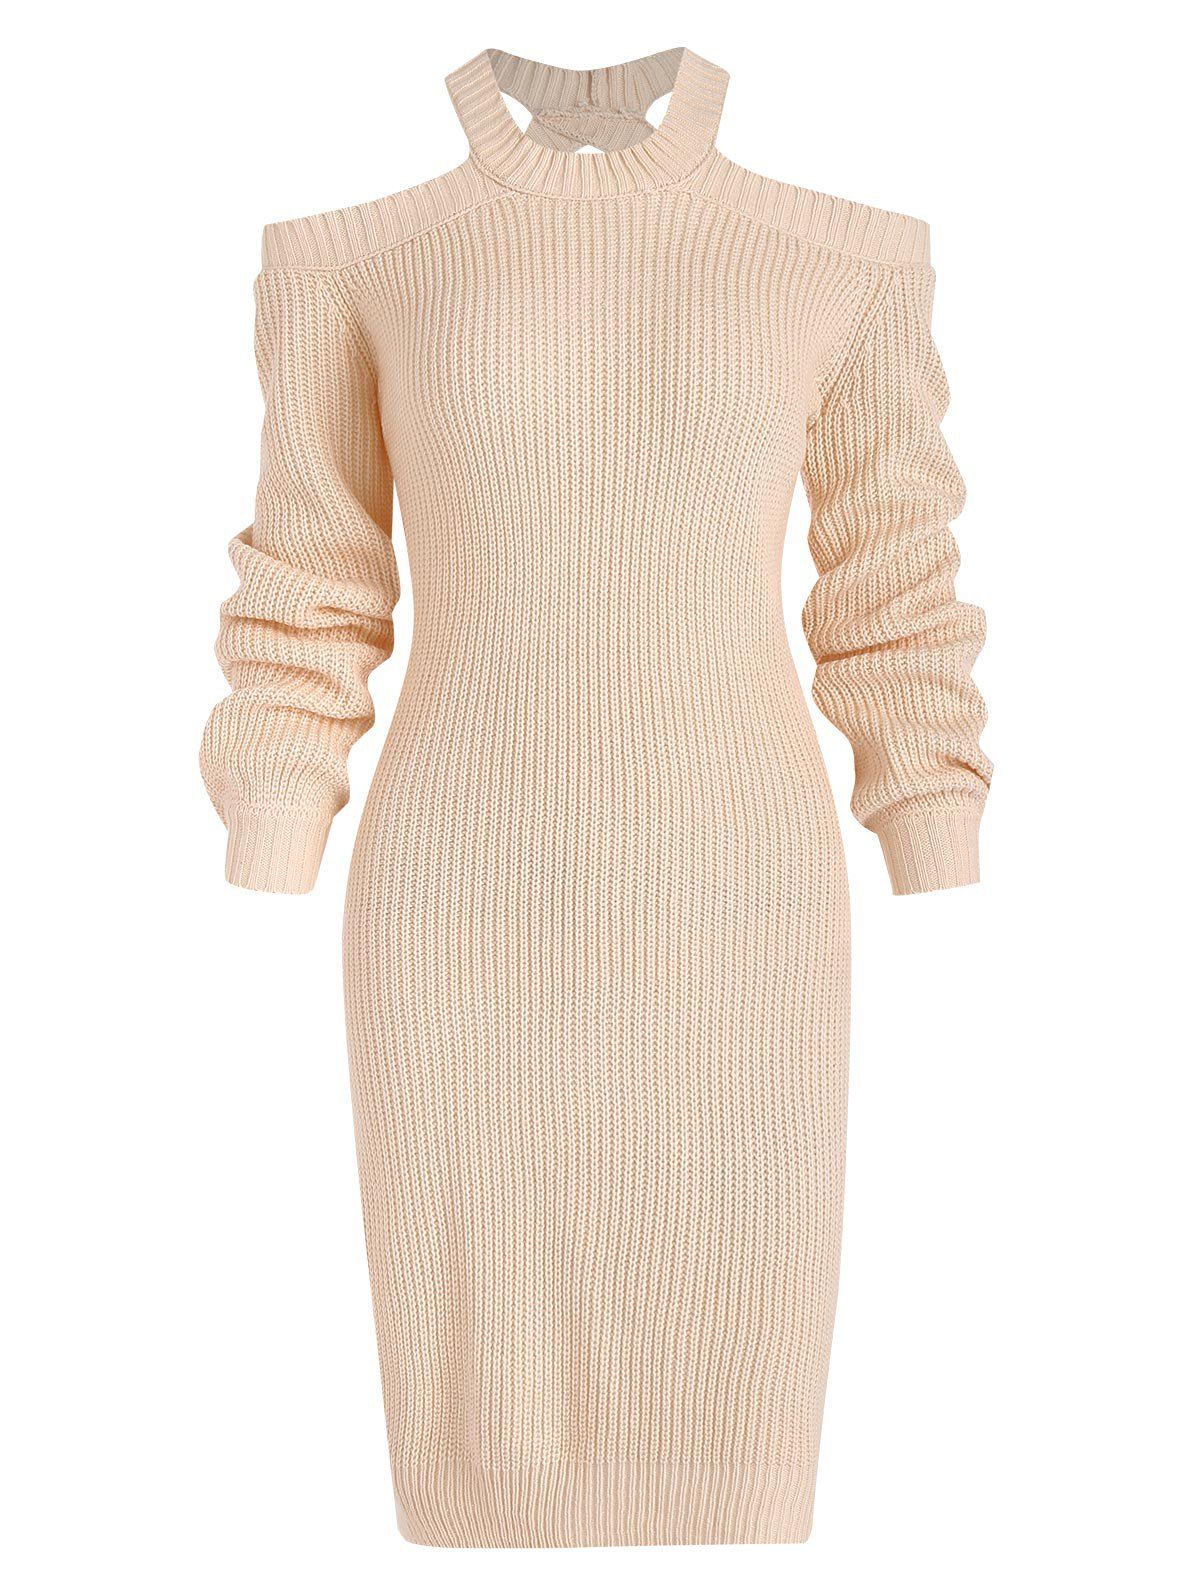 Cold Shoulder Lantern Sleeve Mini Sweater Dress - LIGHT COFFEE L